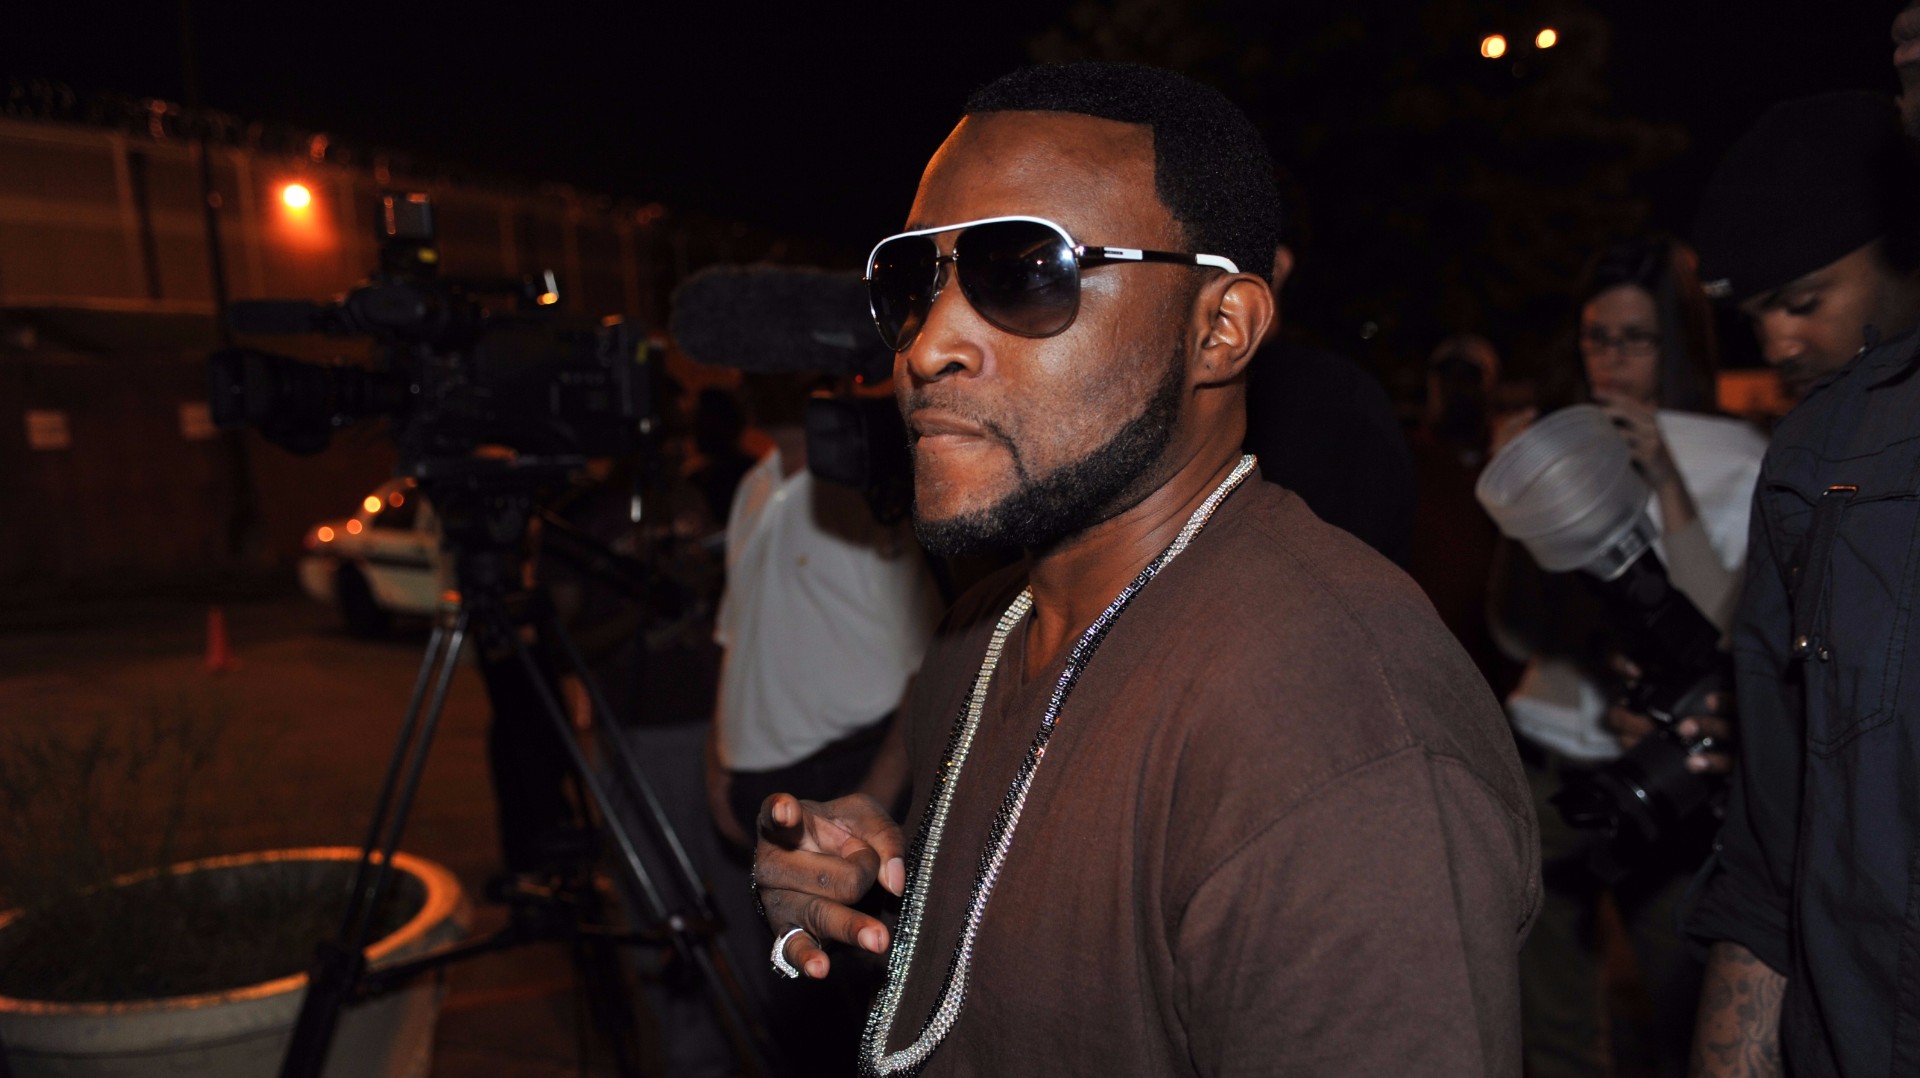 Atlanta rapper Shawty Lo killed in fiery car crash